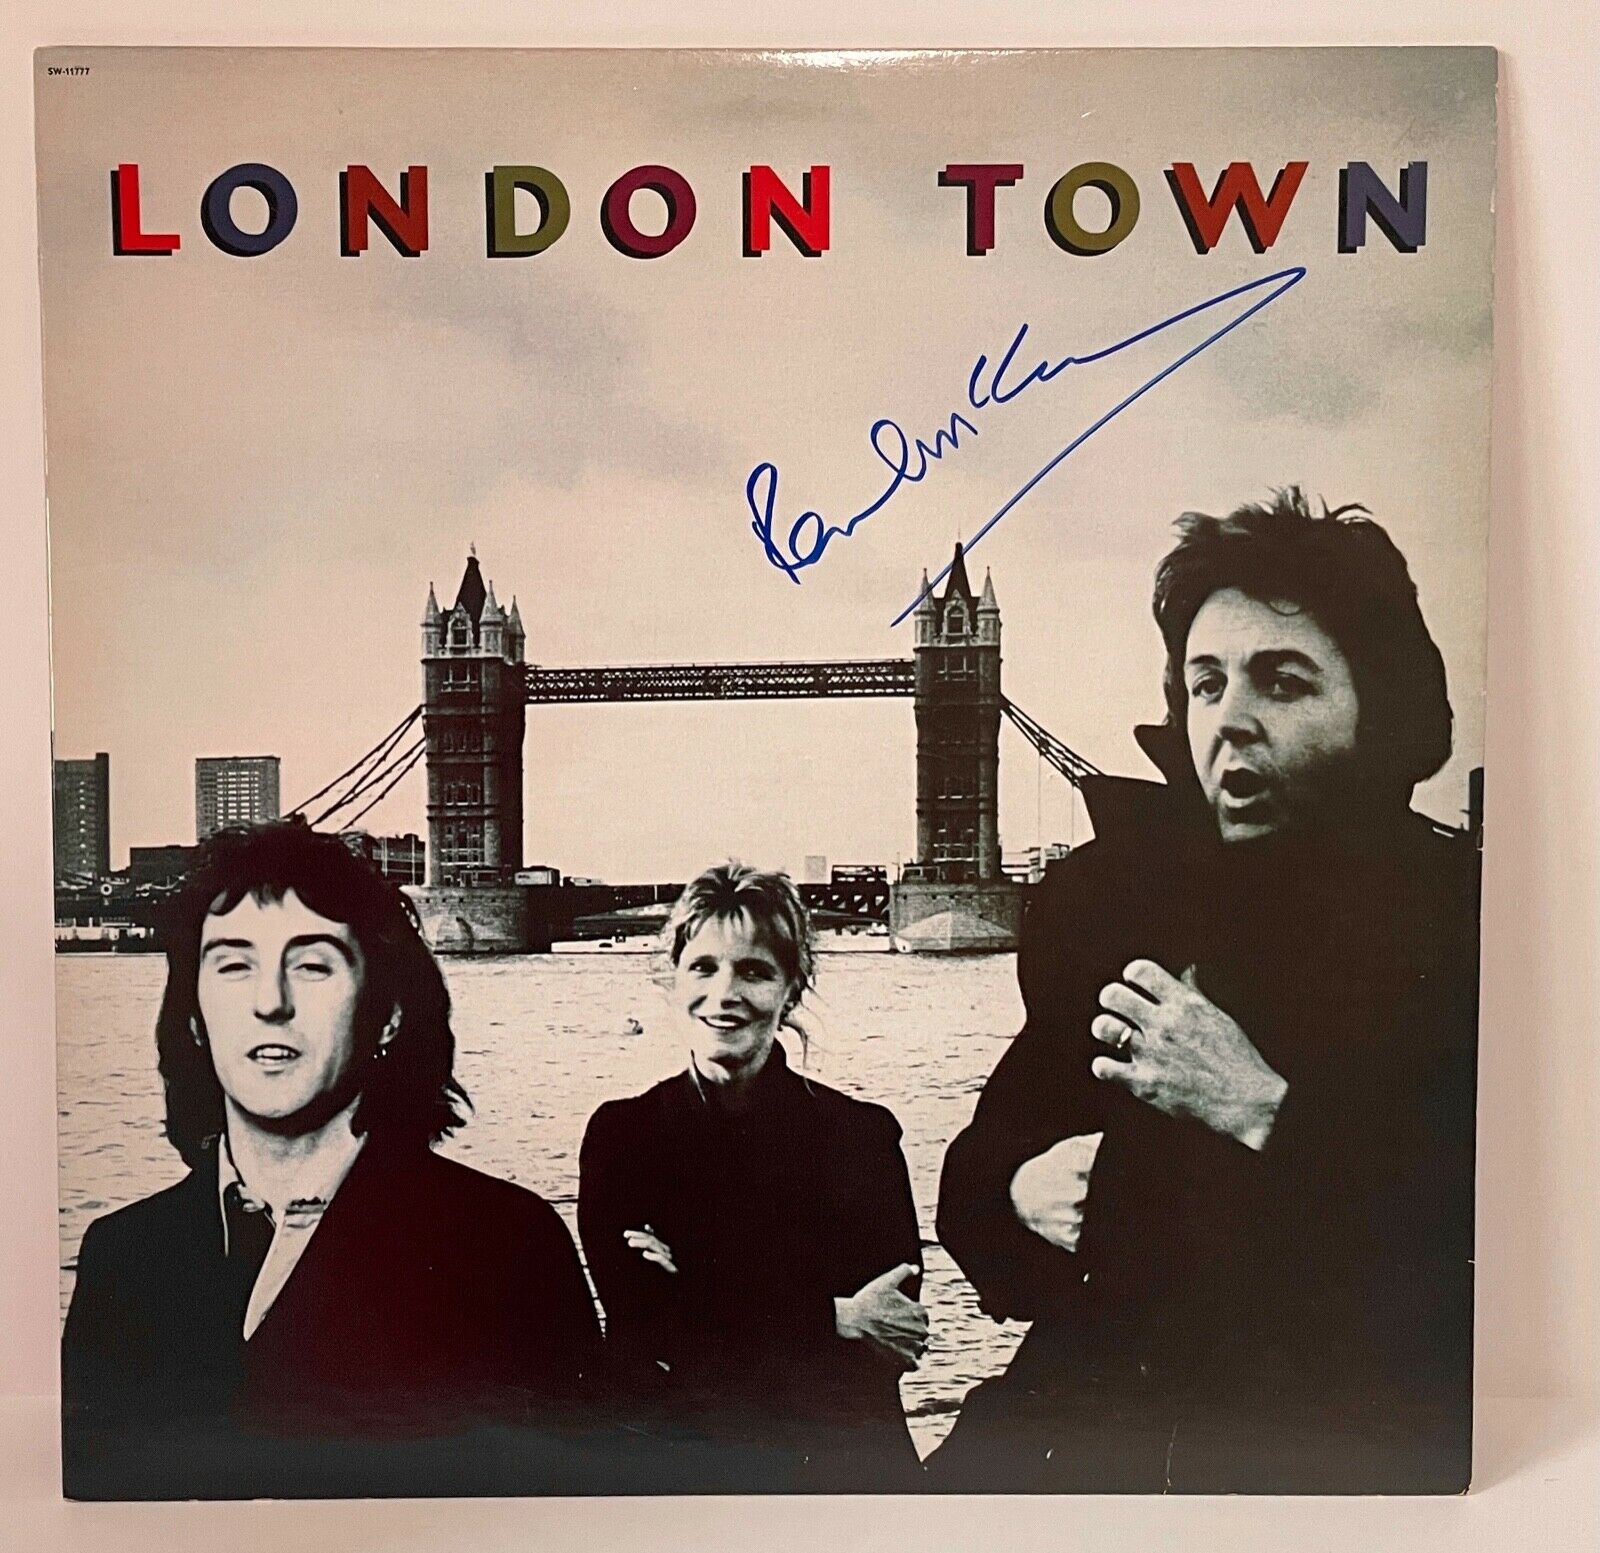 Paul McCartney Signed Auto London Town The Beatles Record LP Album W/ COA